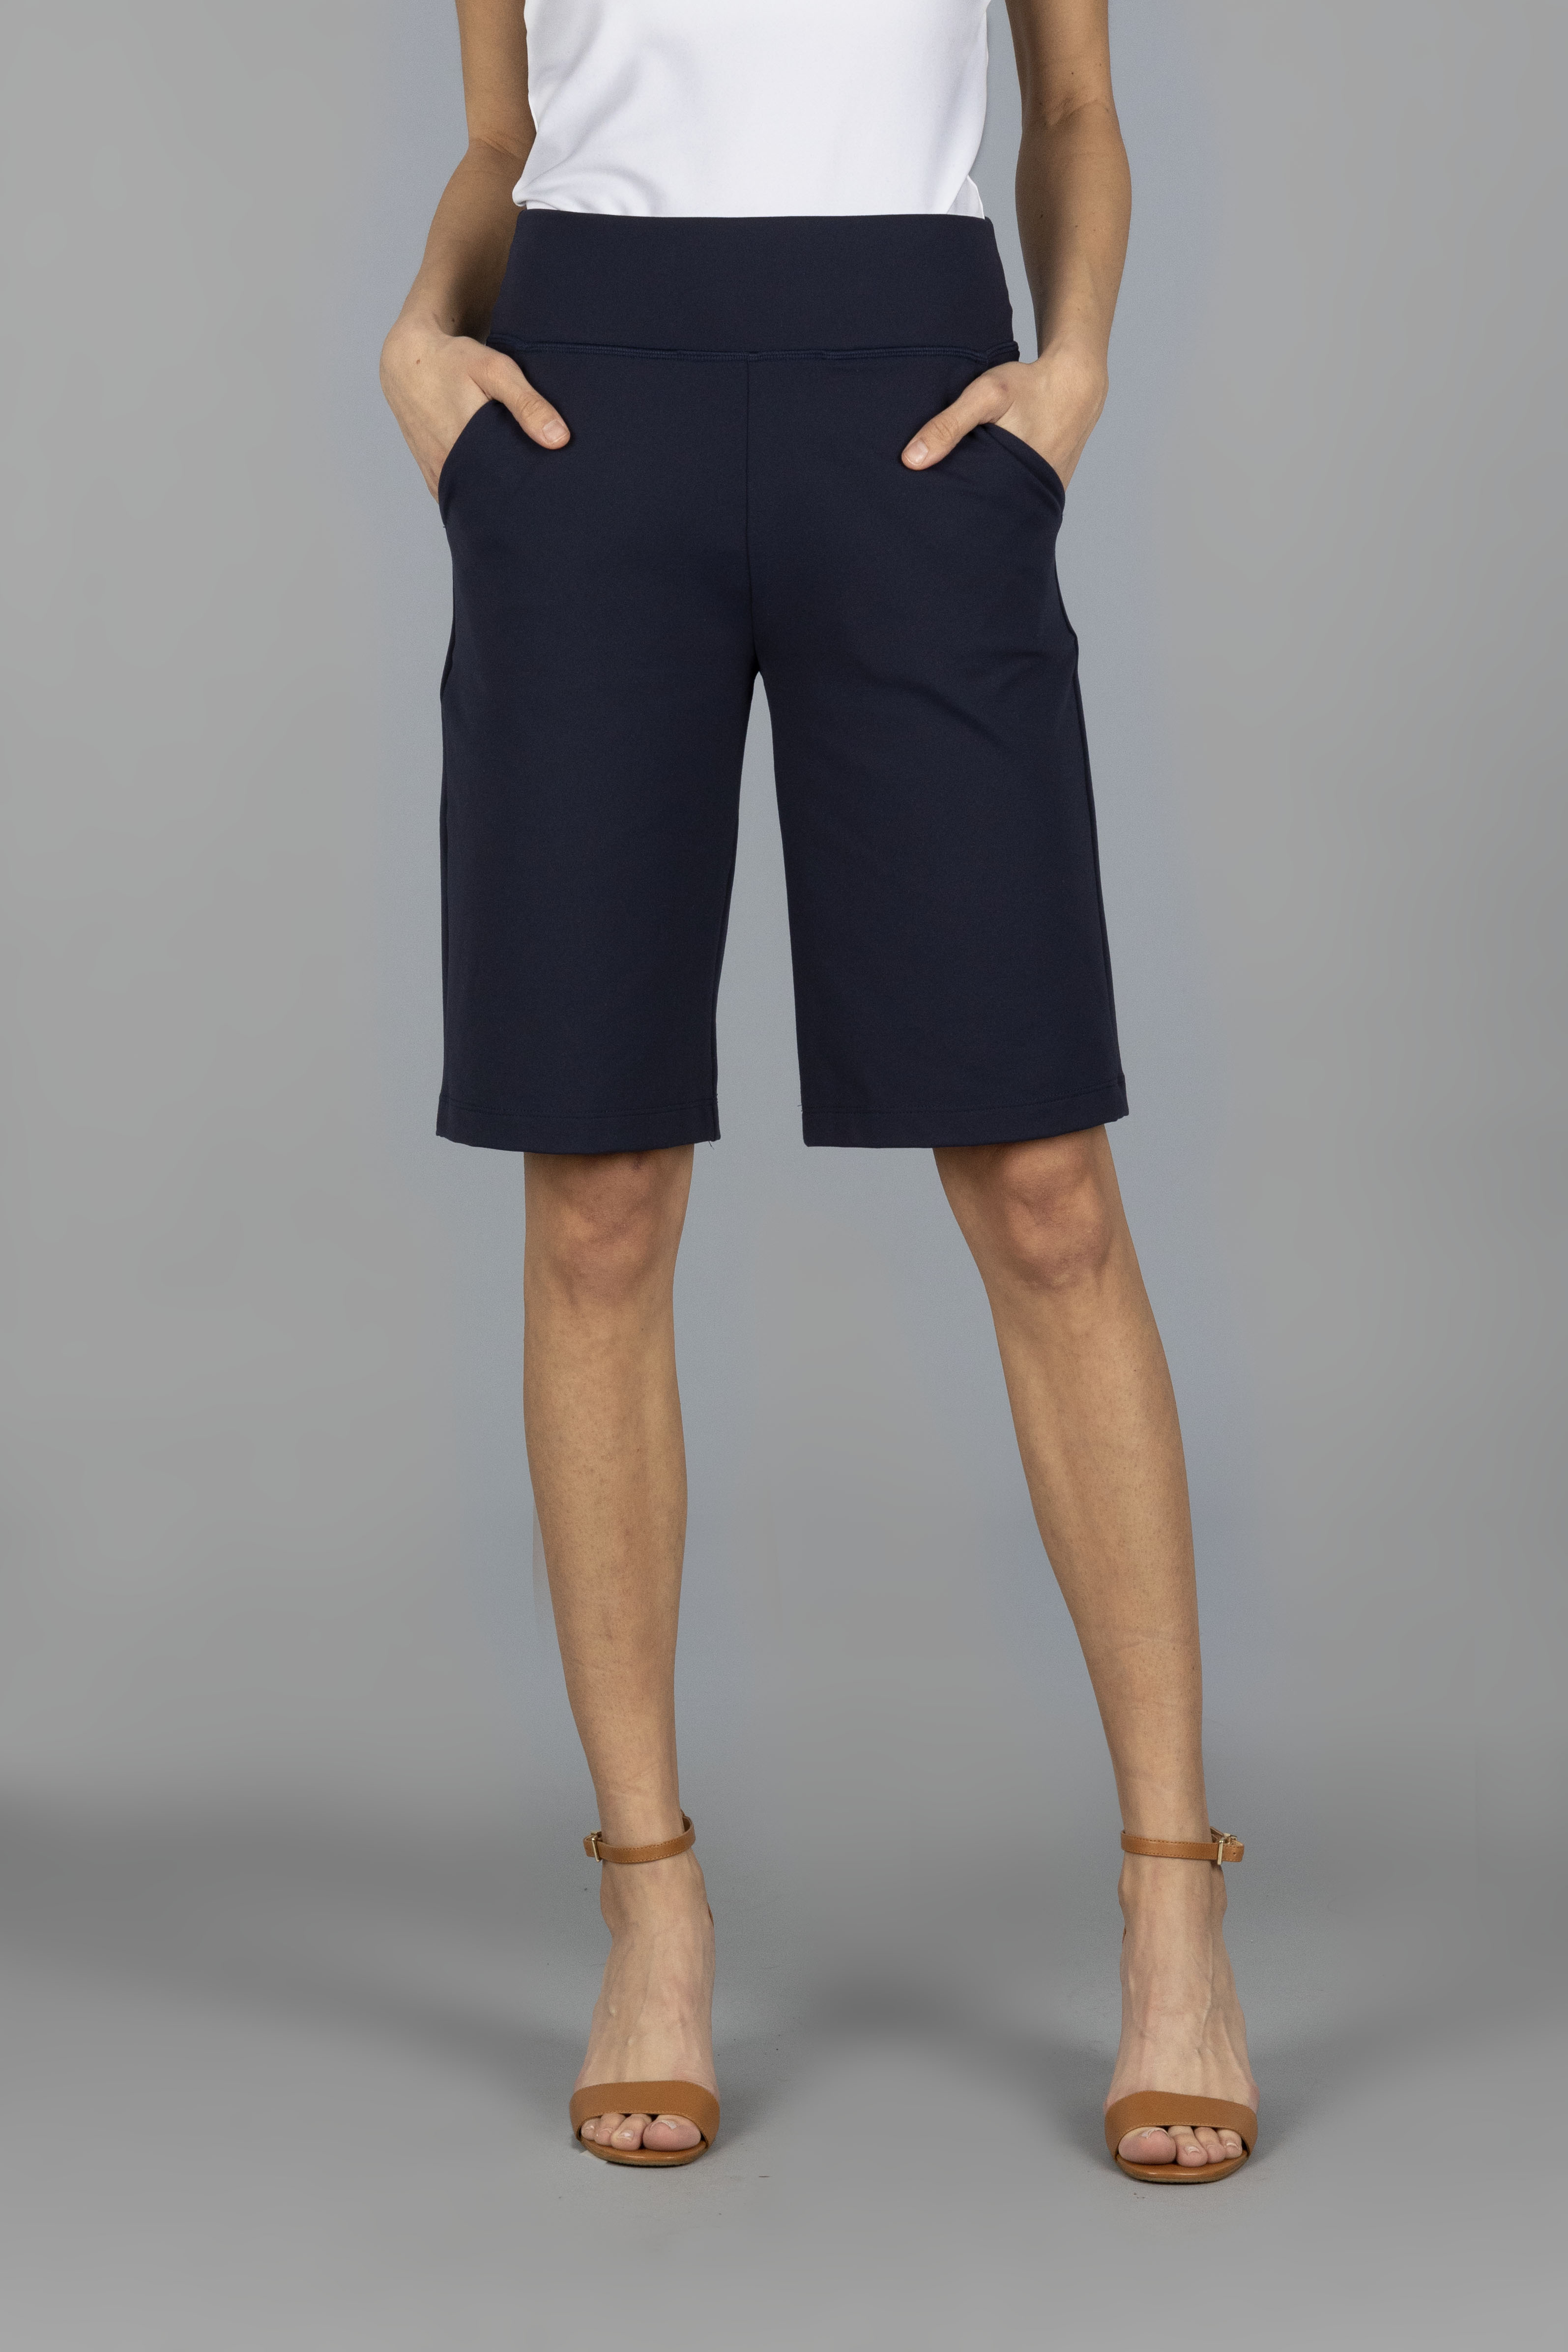 bermuda navy shorts